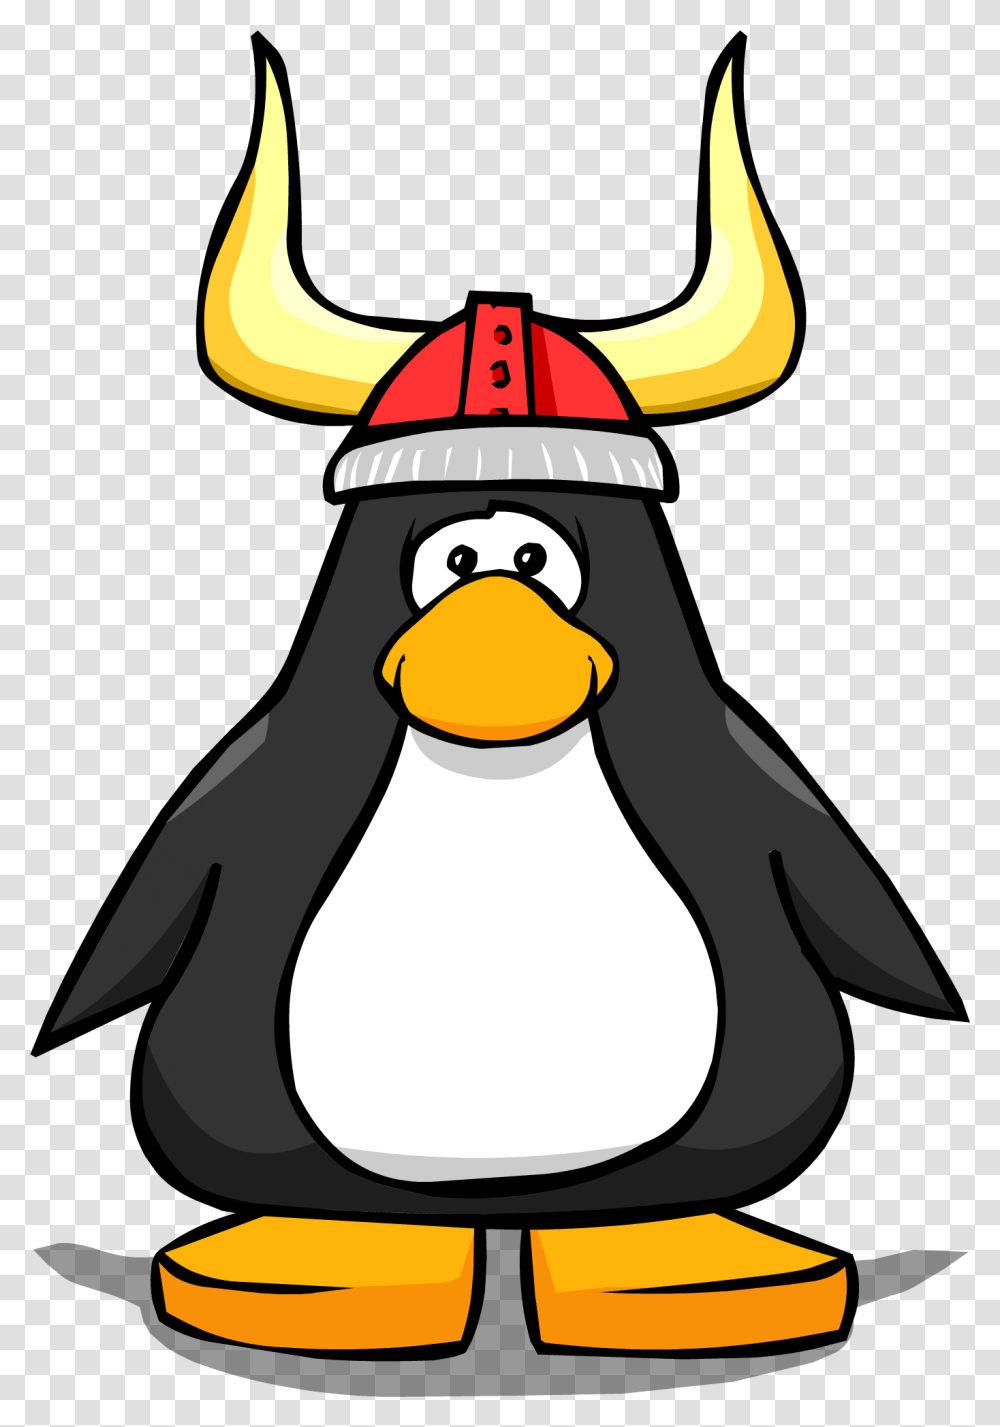 Viking Helmet Pc Penguin With Top Hat, Bird, Animal, King Penguin Transparent Png